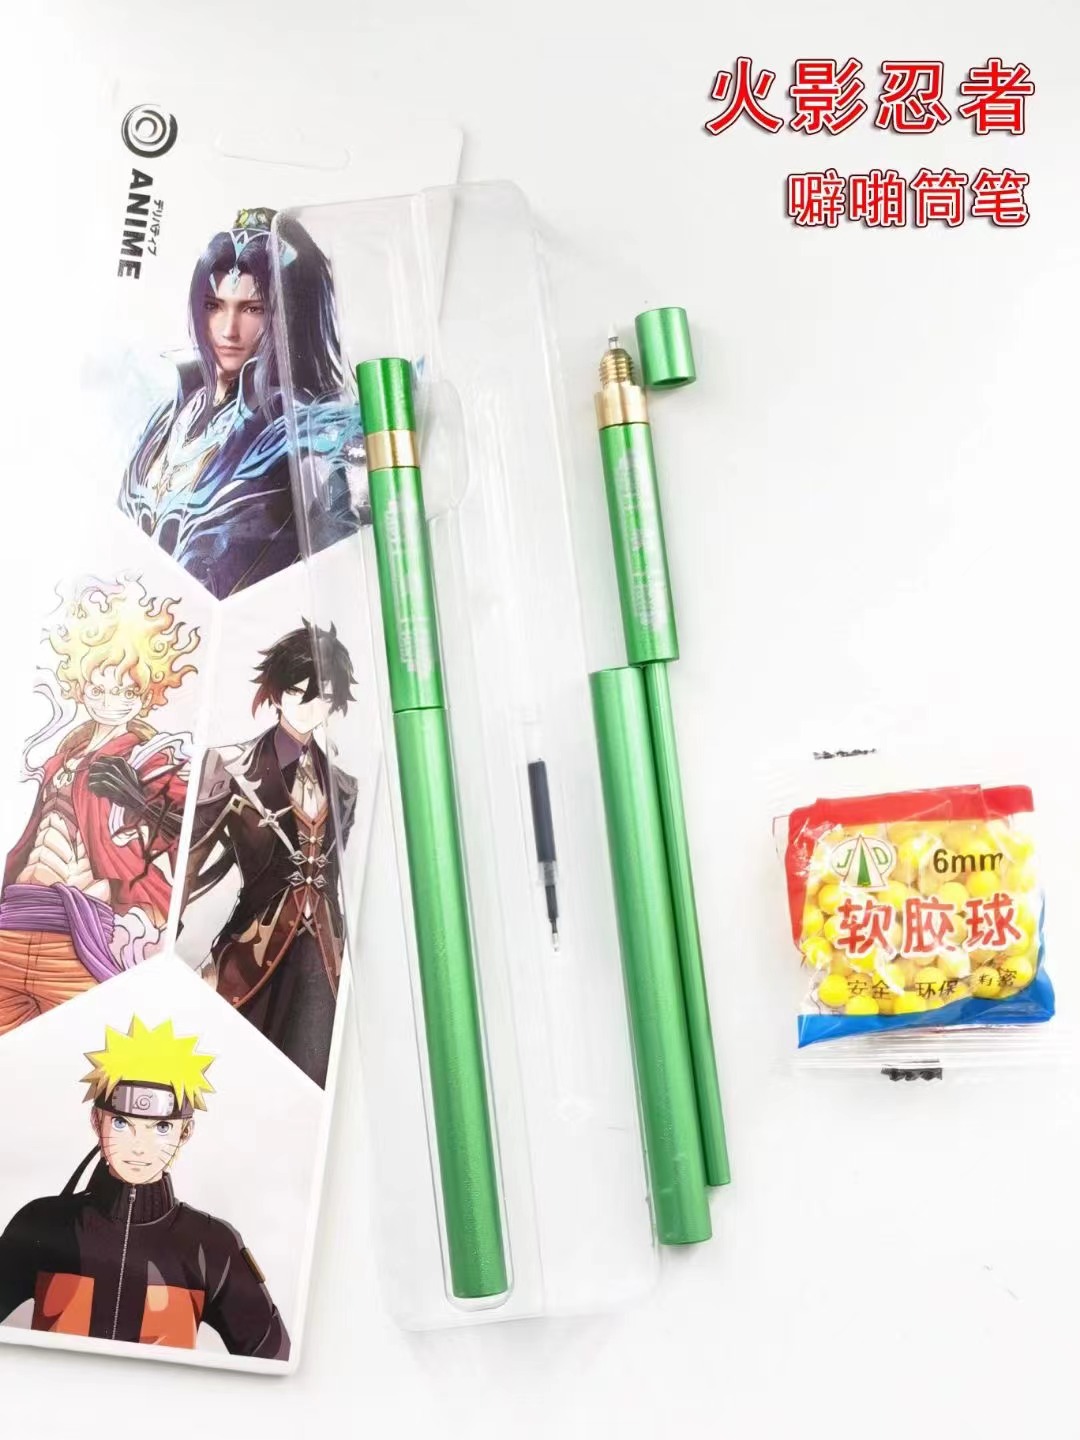 Naruto anime pipa tube pen